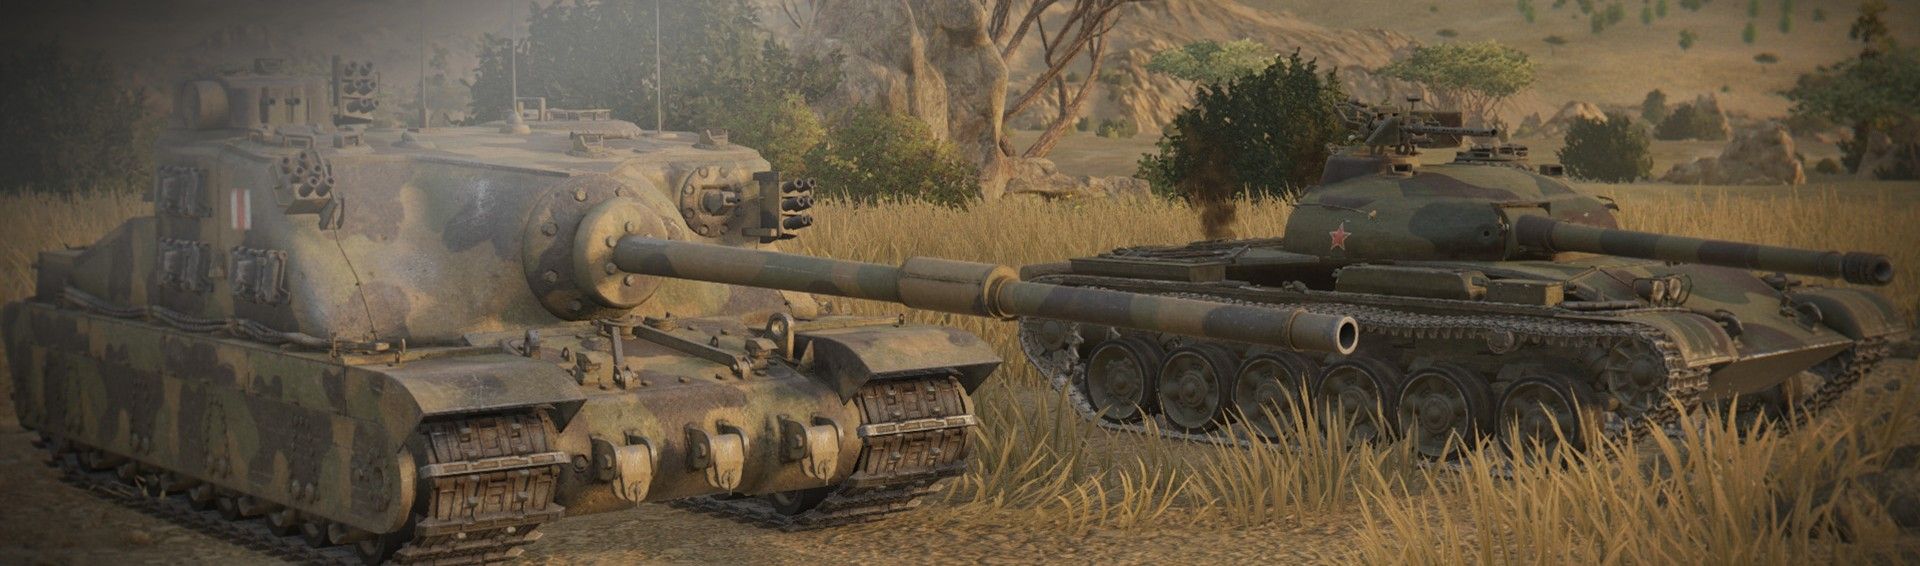 world of tanks grand battles missions